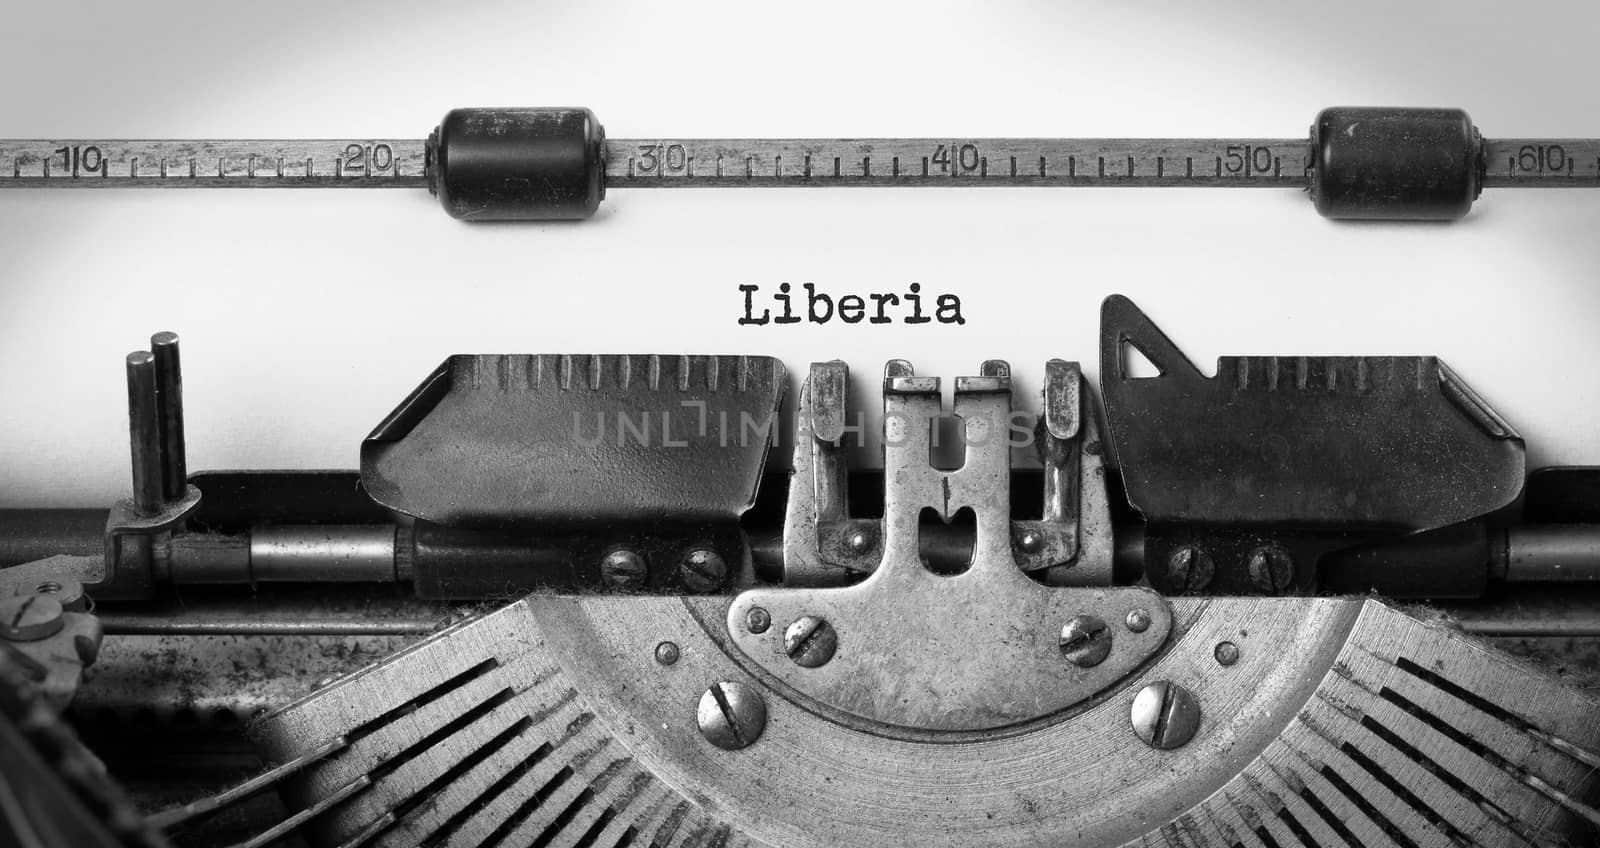 Old typewriter - Liberia by michaklootwijk